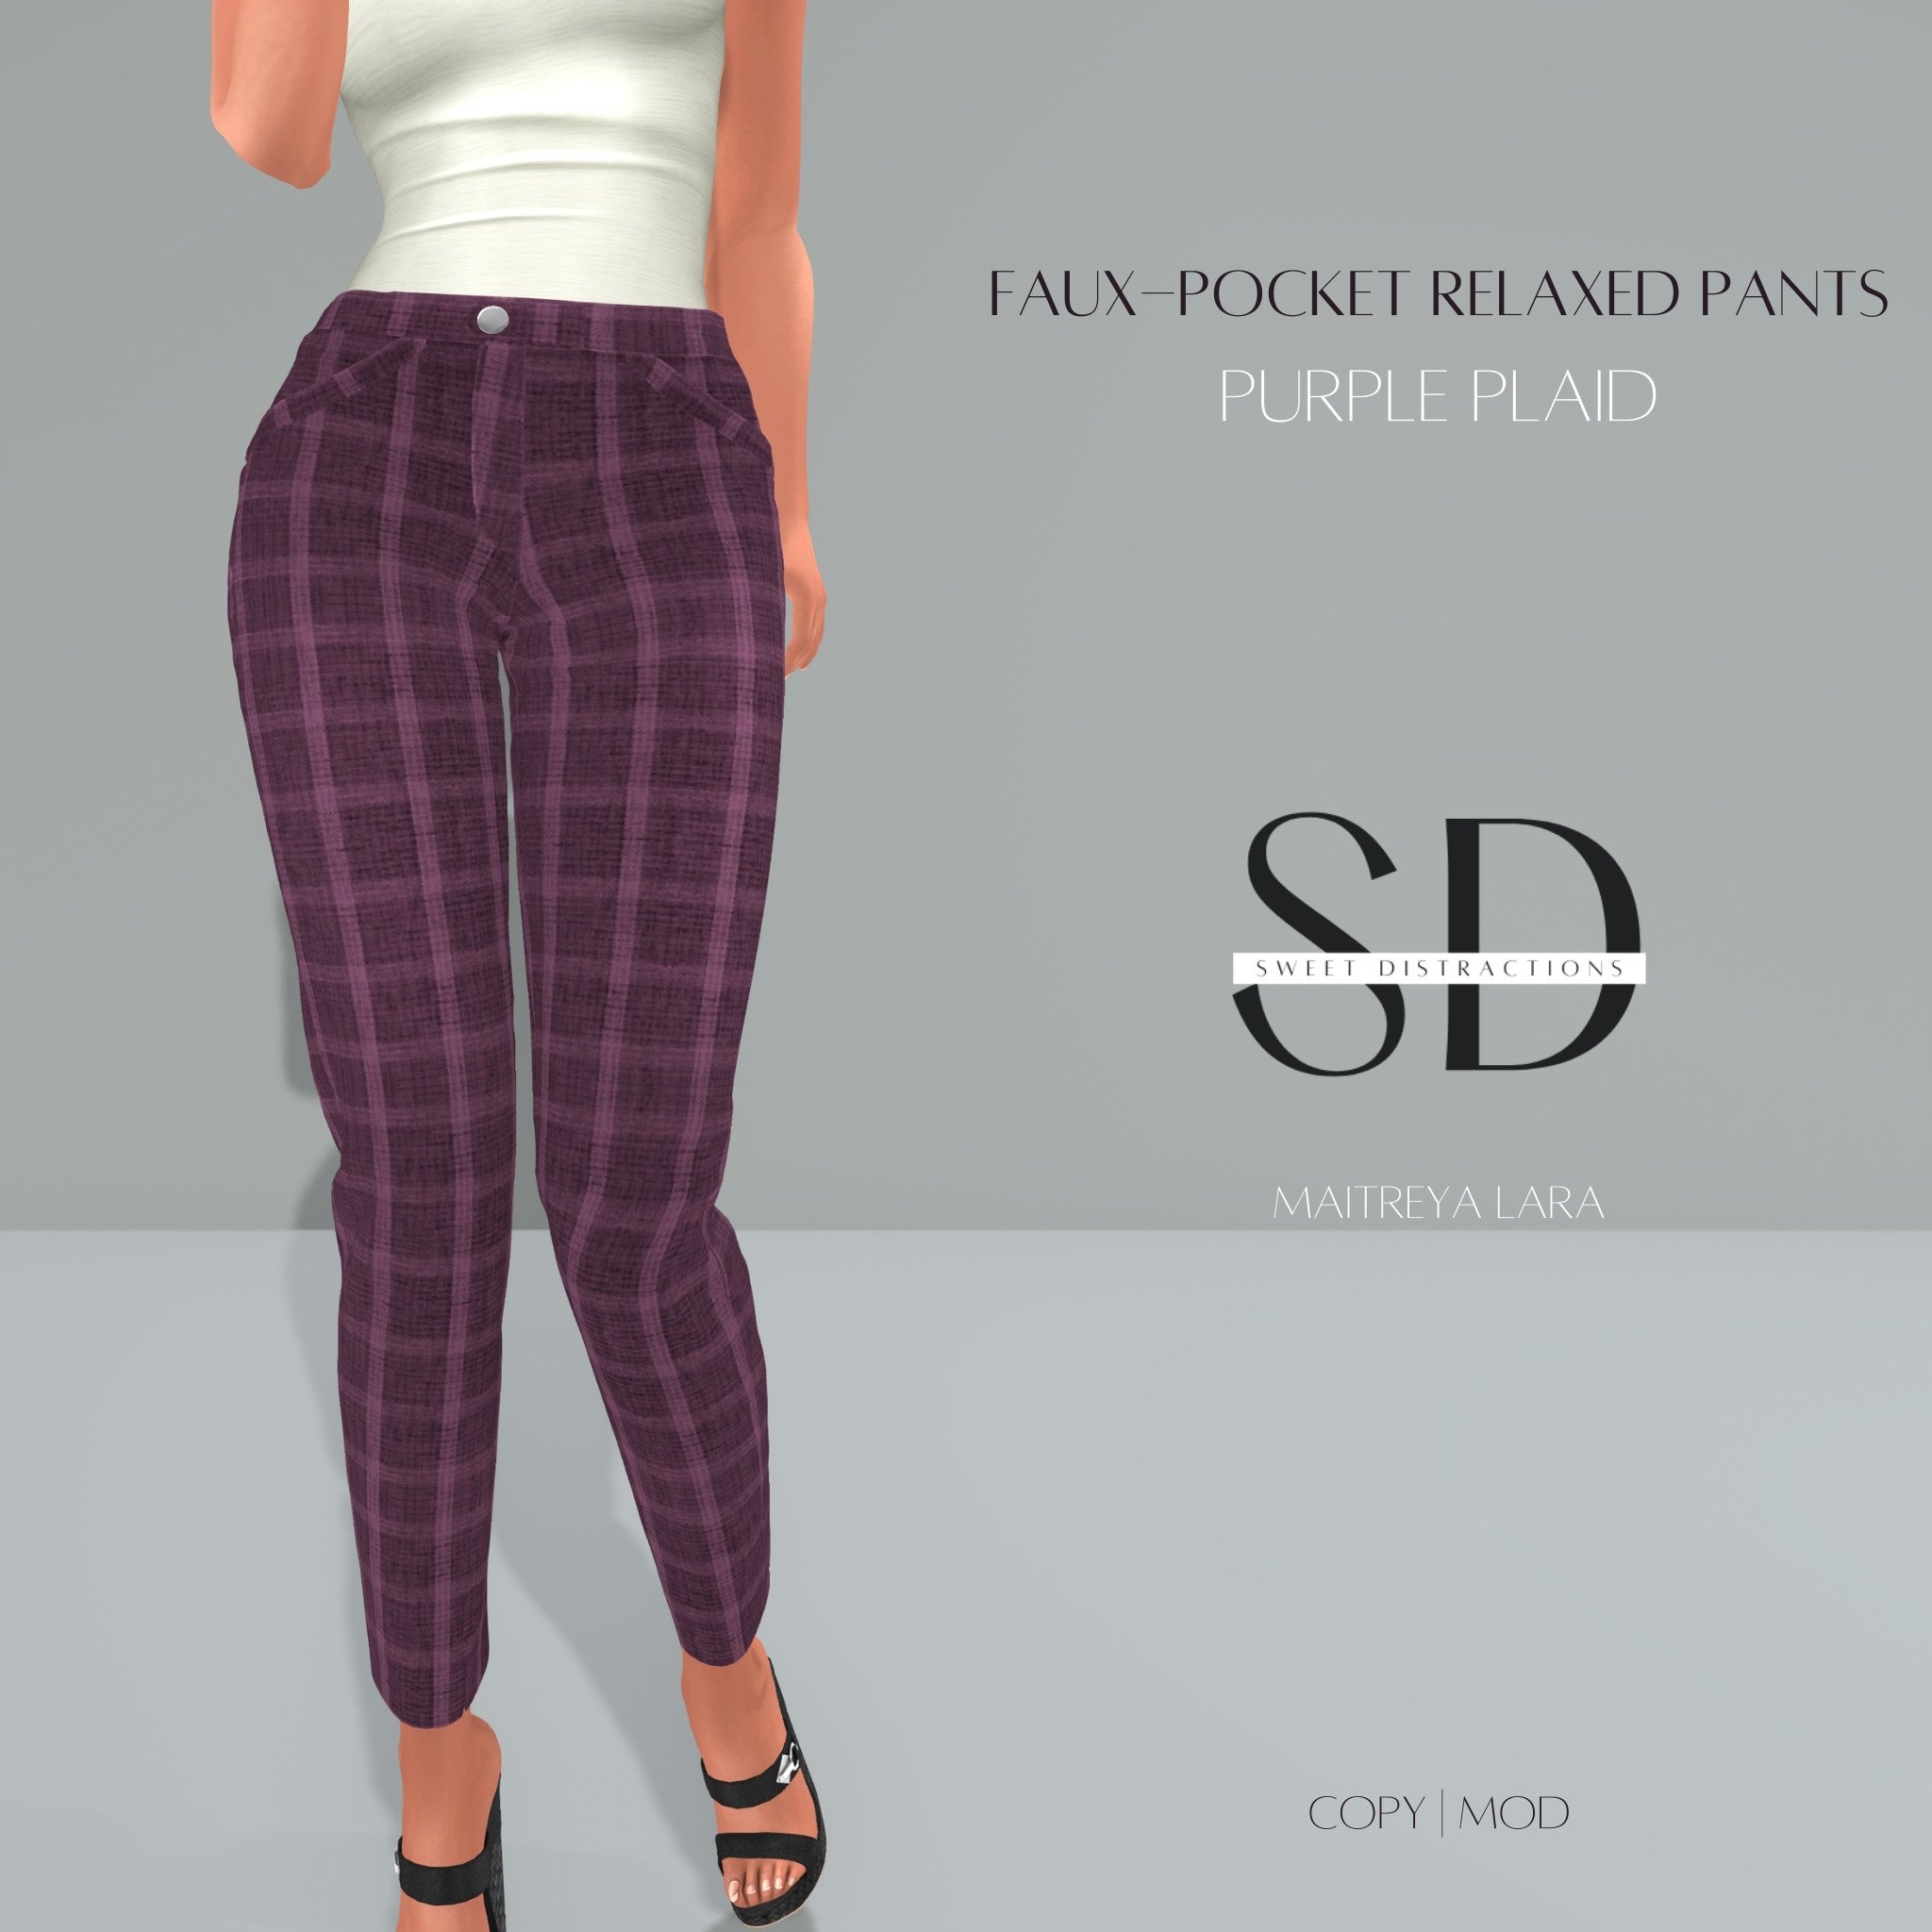 Faux-pocket Relaxed Pants - Purple Plaid_SL Vendor Pic.jpg